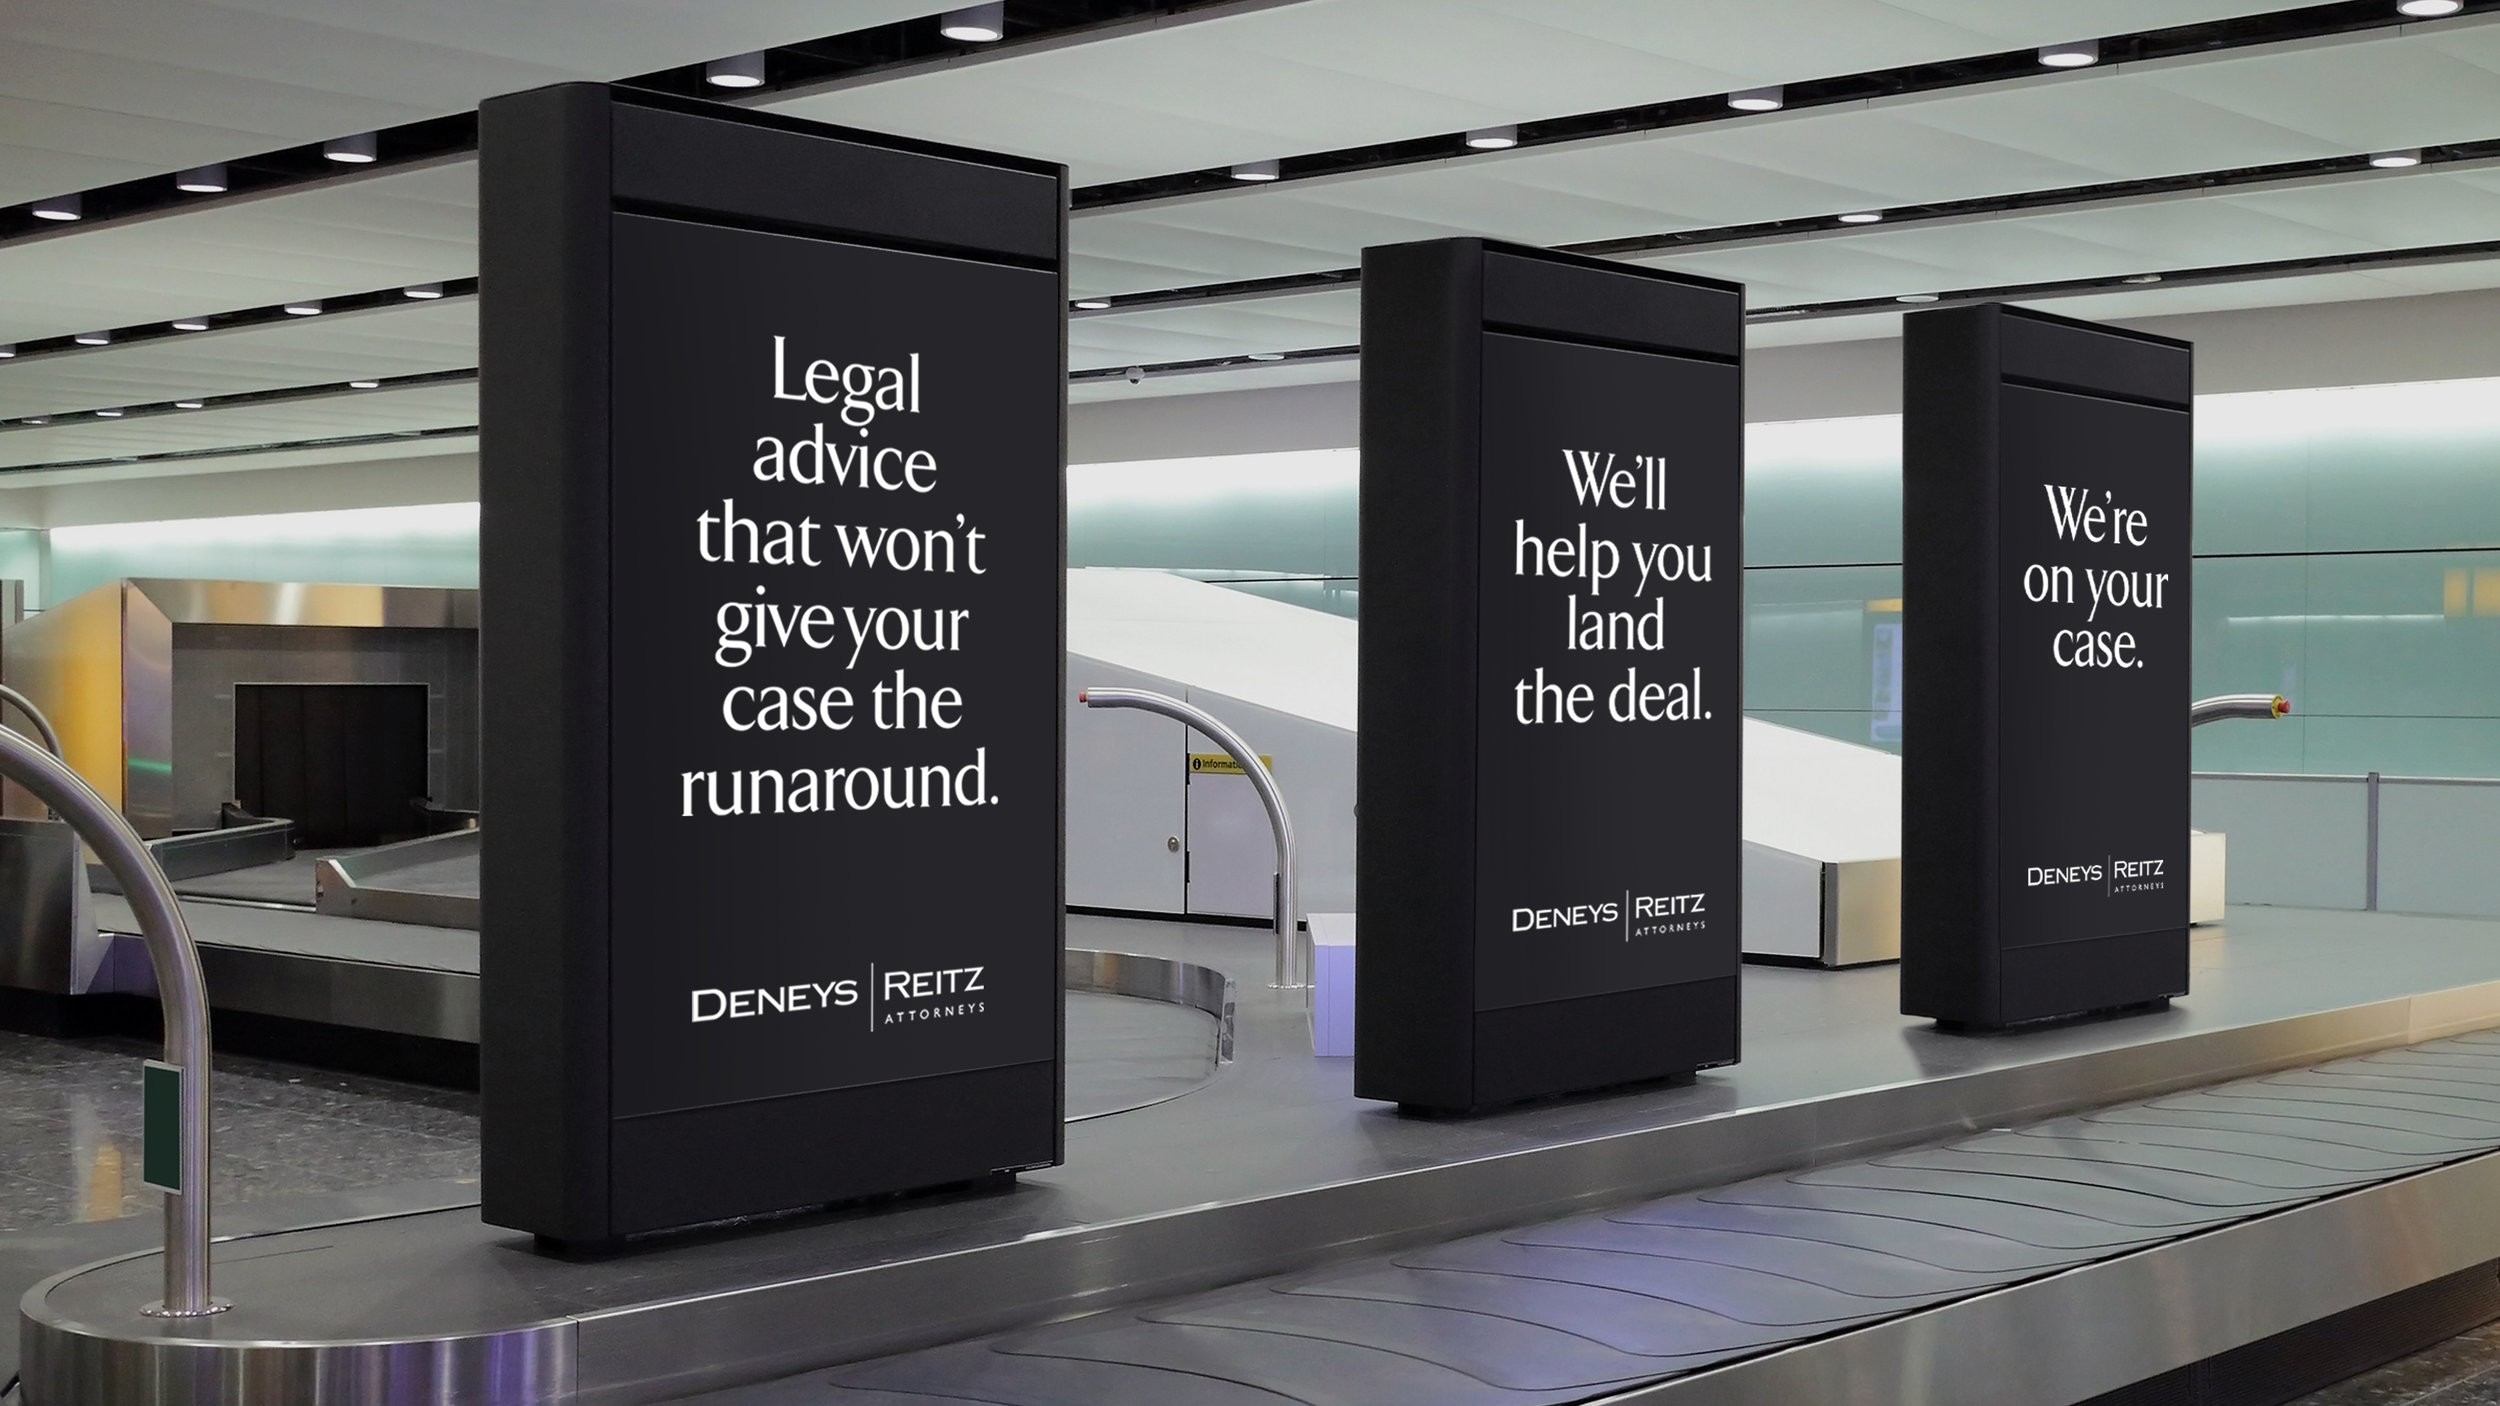 Brand_republica_airport_luggage_carousel_advertising_campaign_deneysreitz_attorneys.jpg